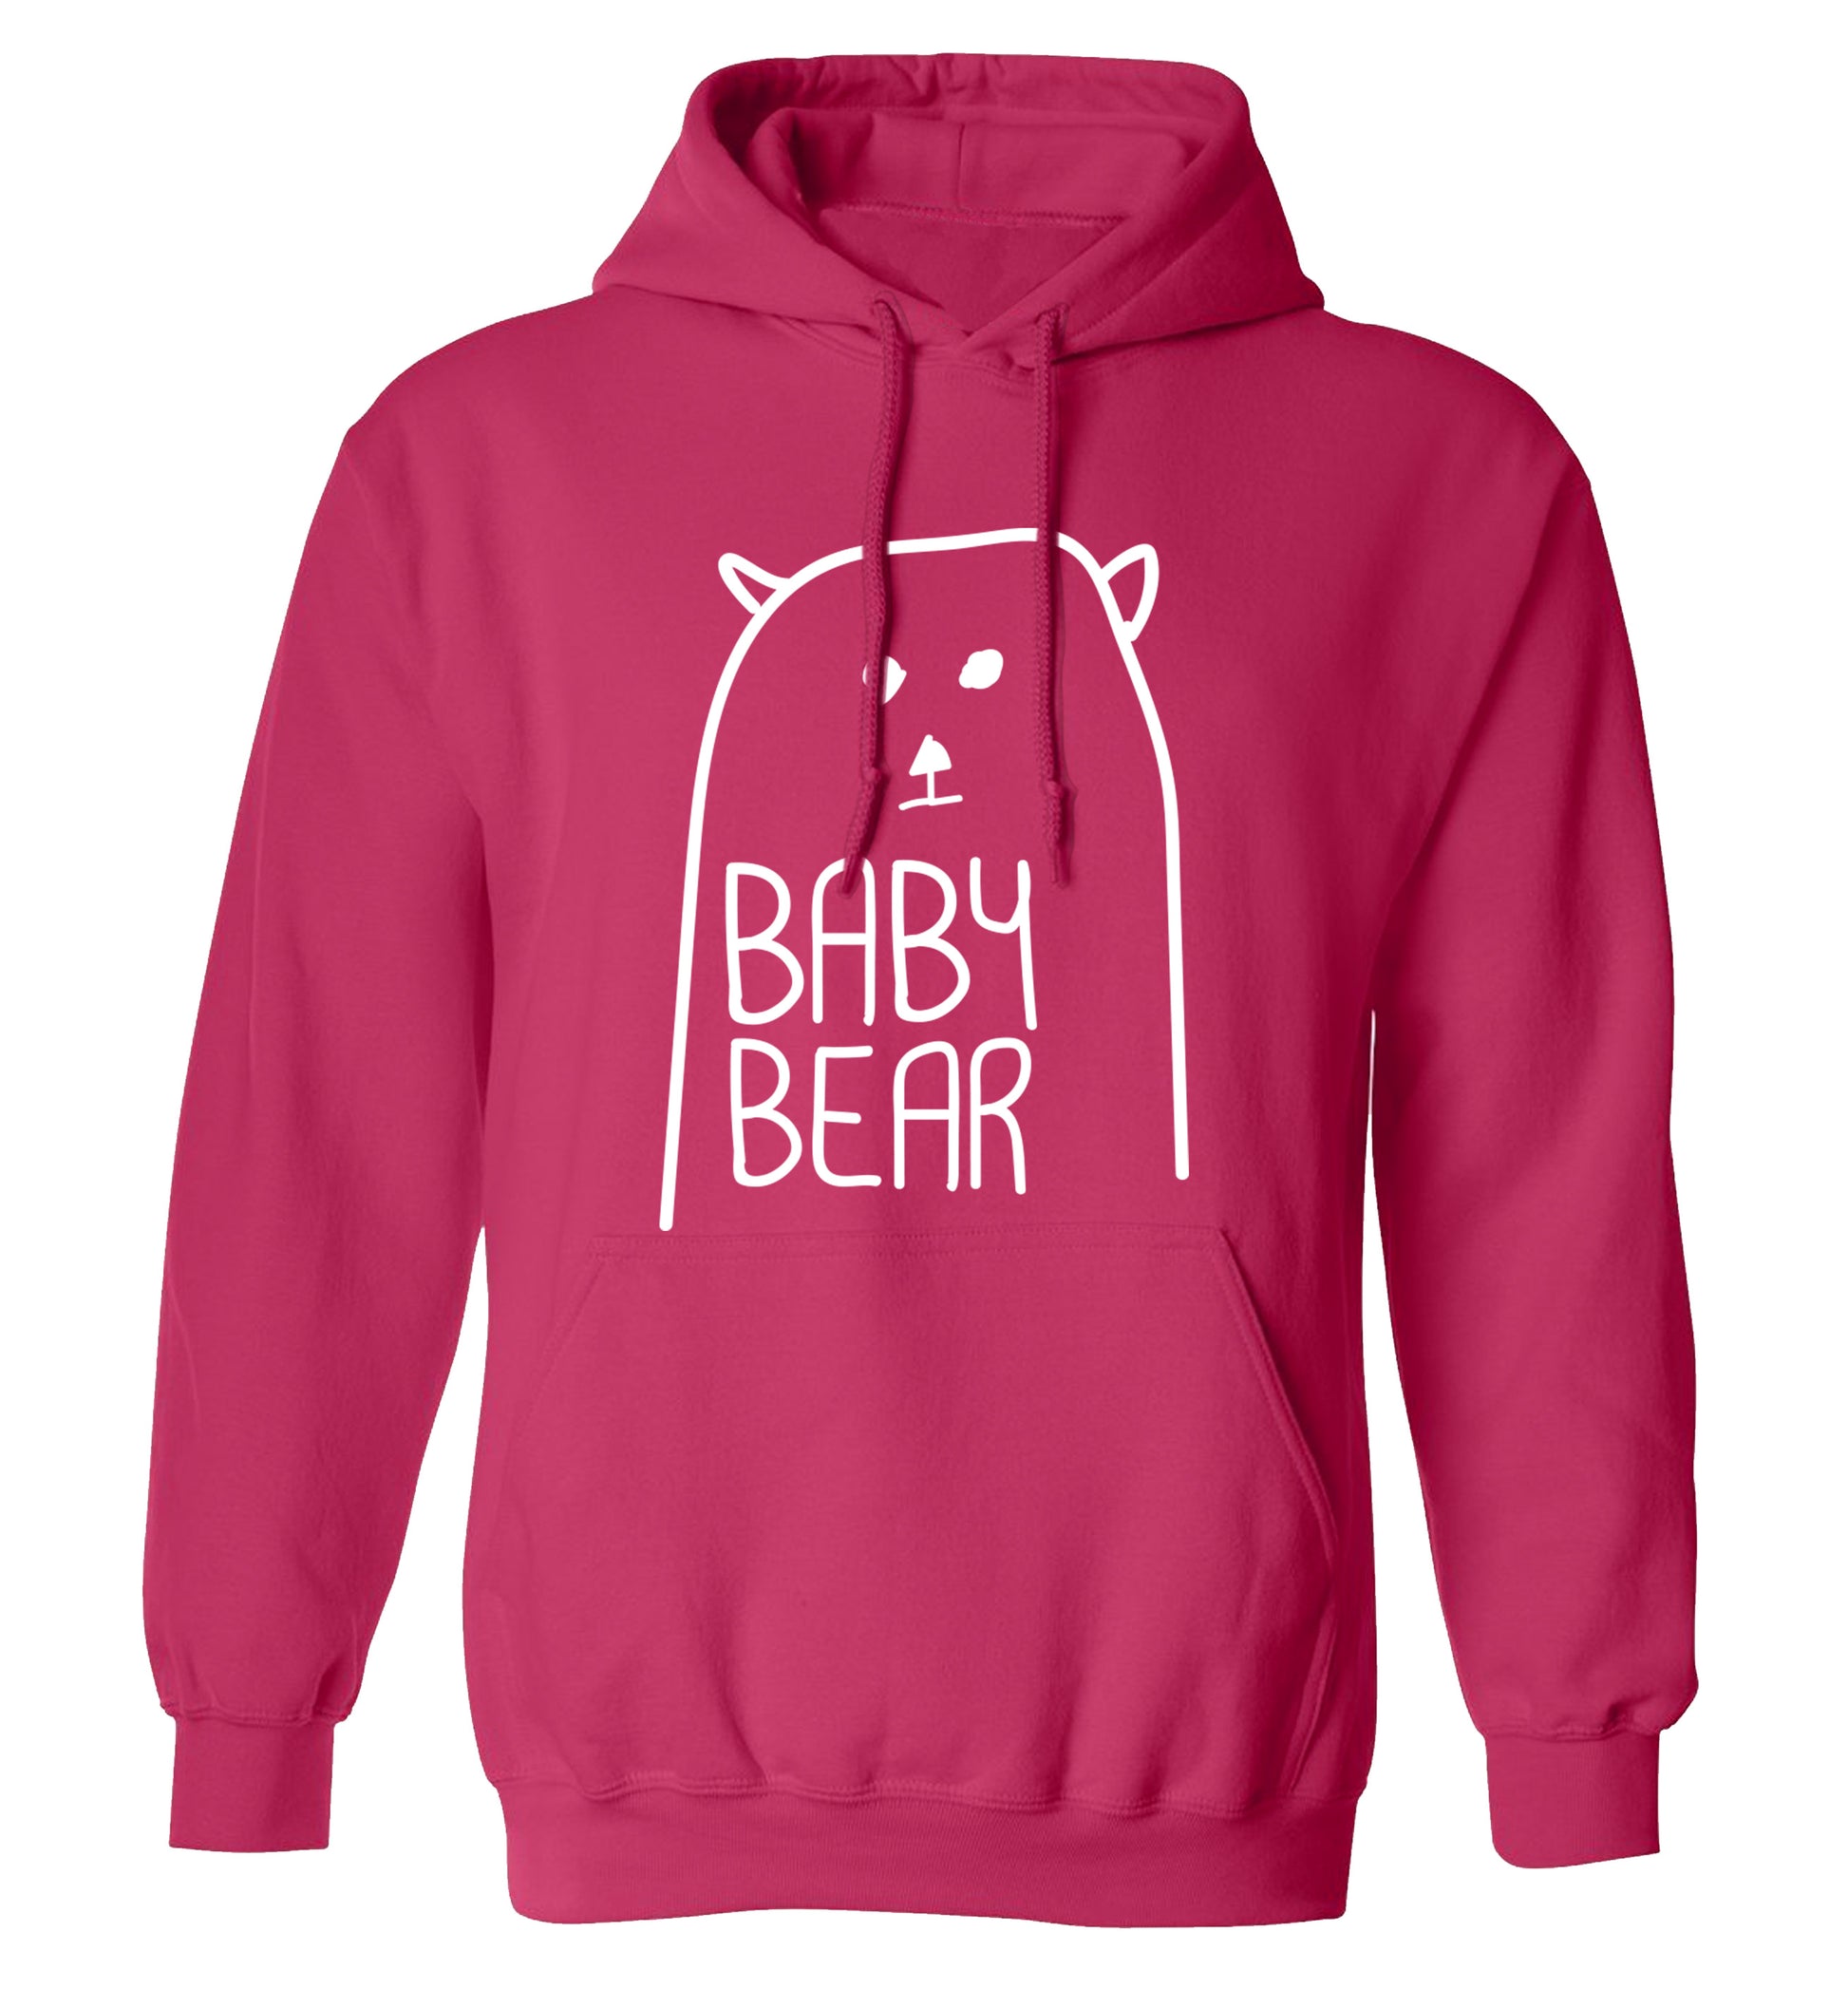 Baby bear adults unisex pink hoodie 2XL